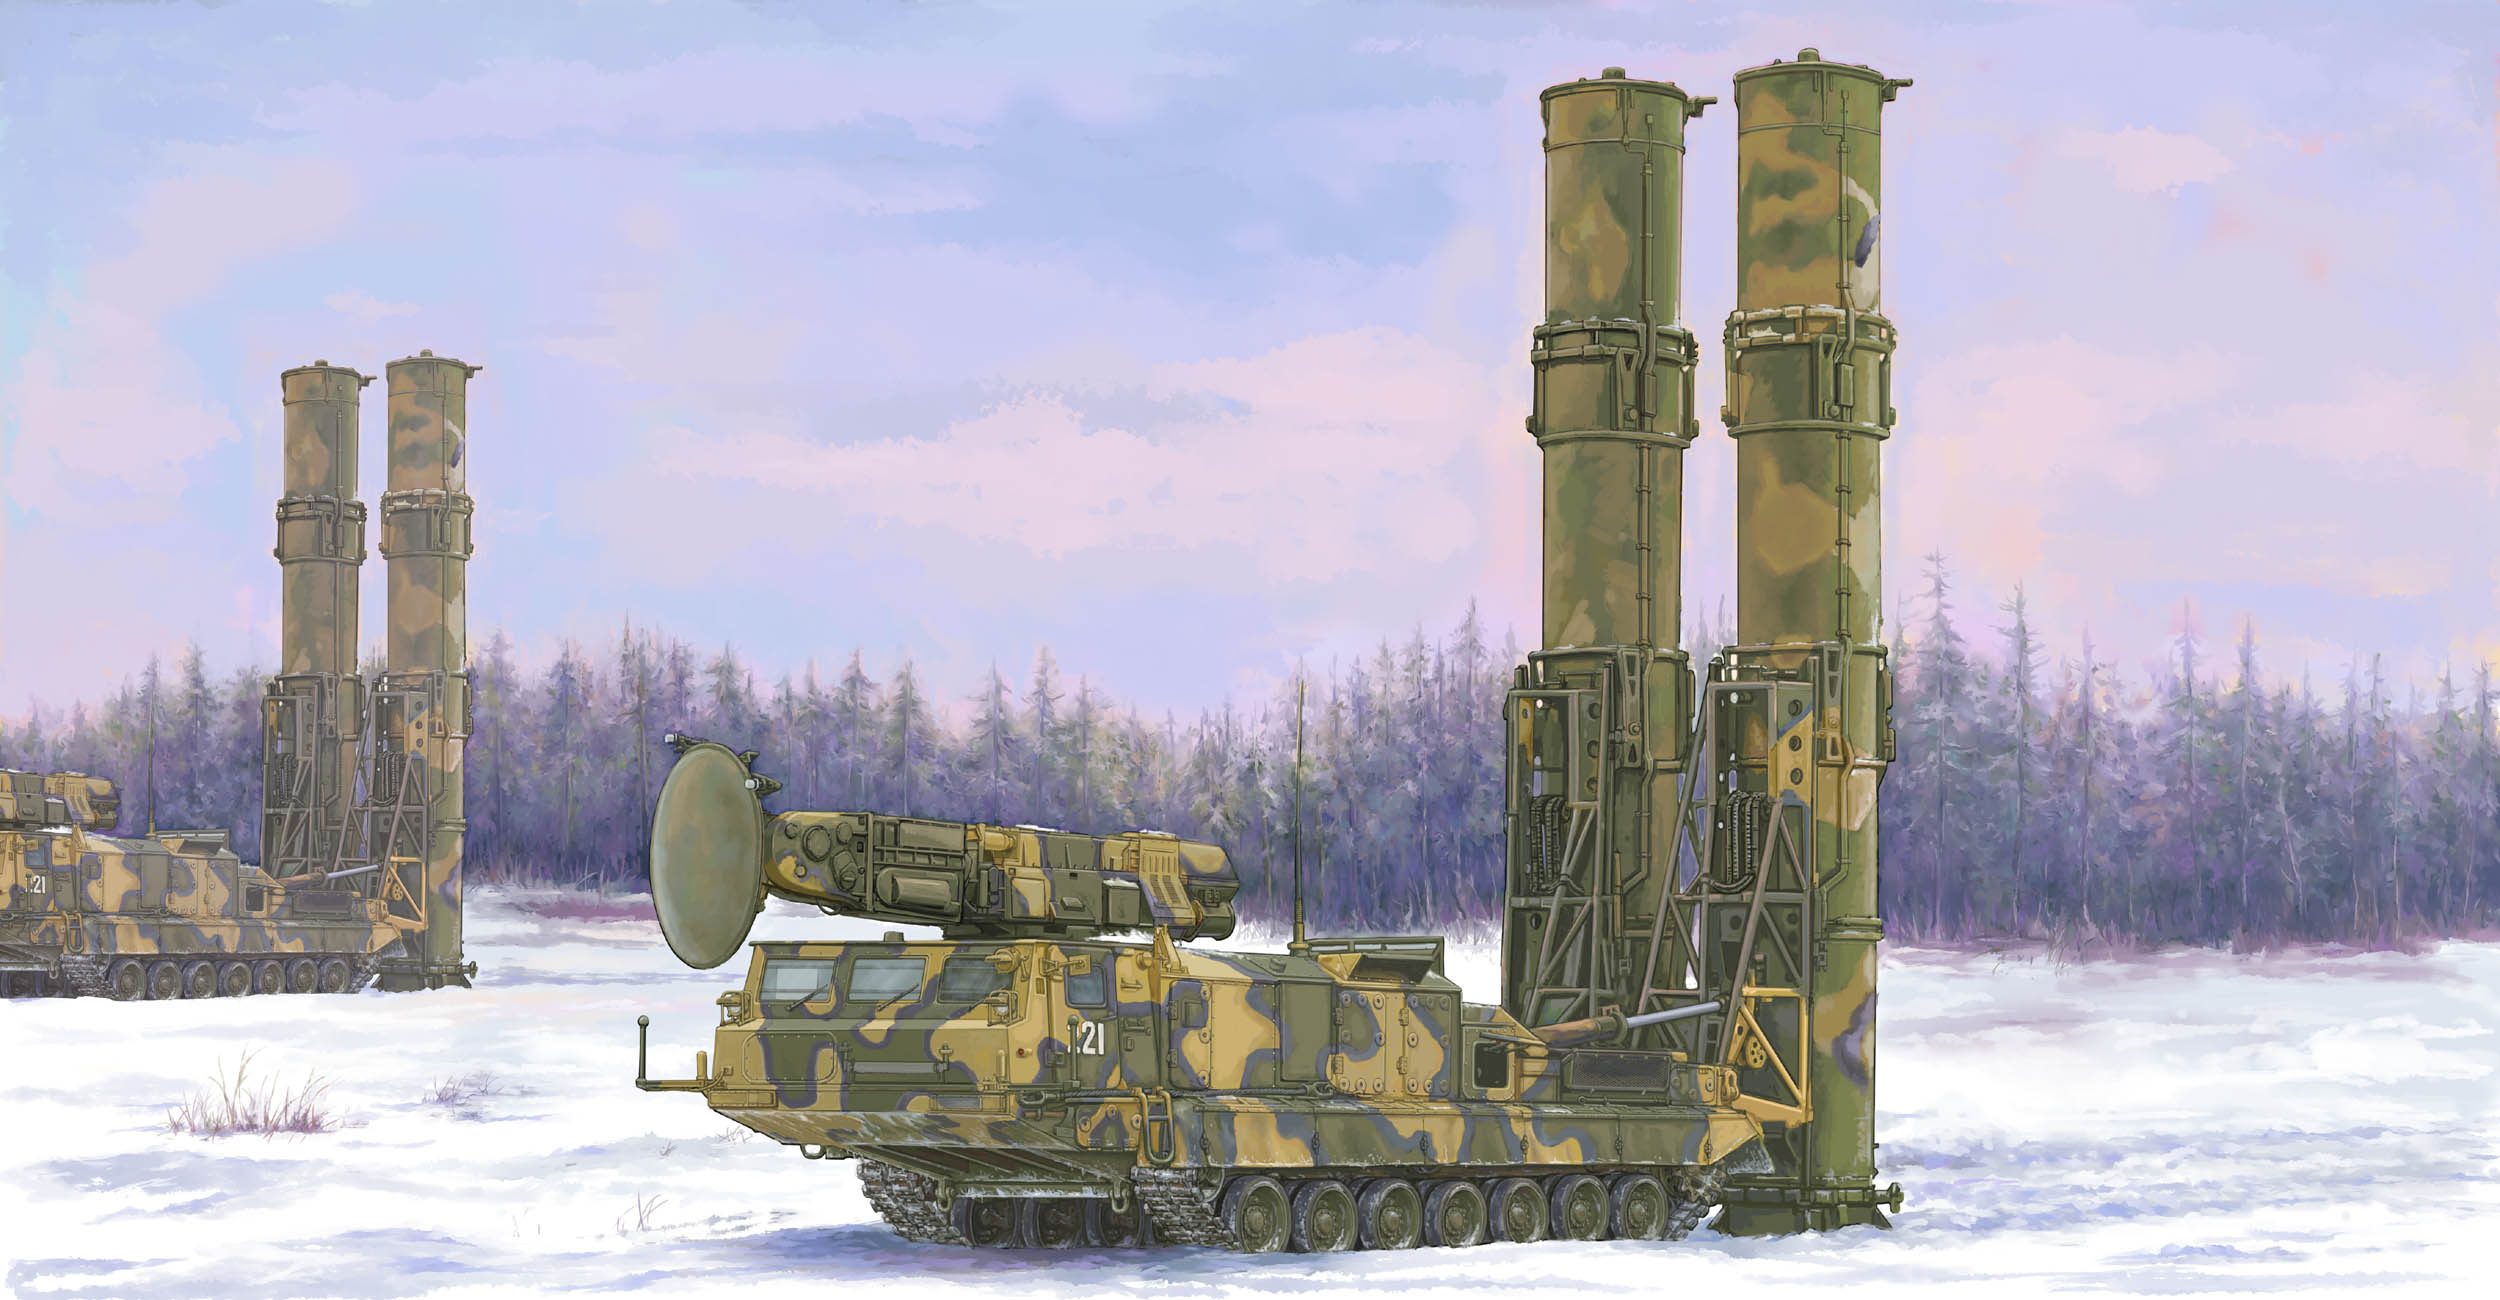 рисунок Russian S-300V 9A82 SAM